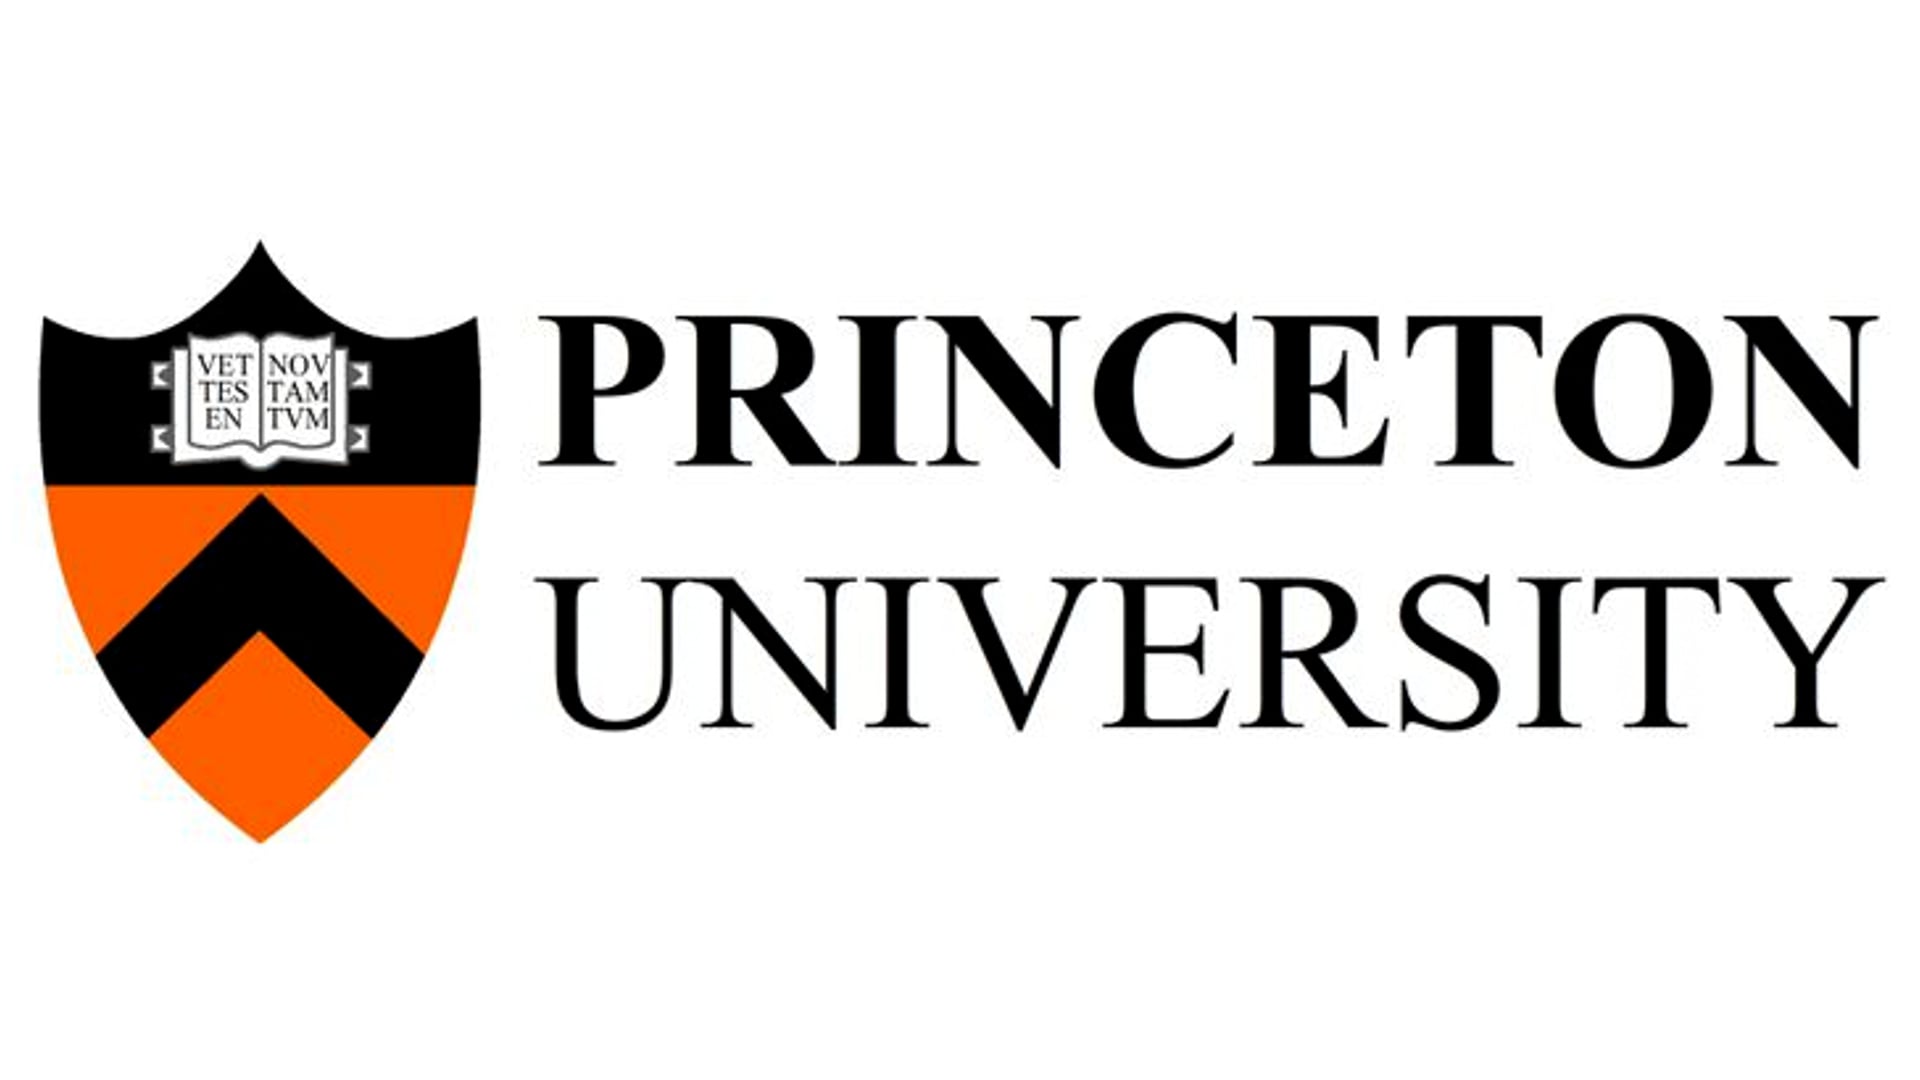 Princeton Engineering: Aspire to Invent